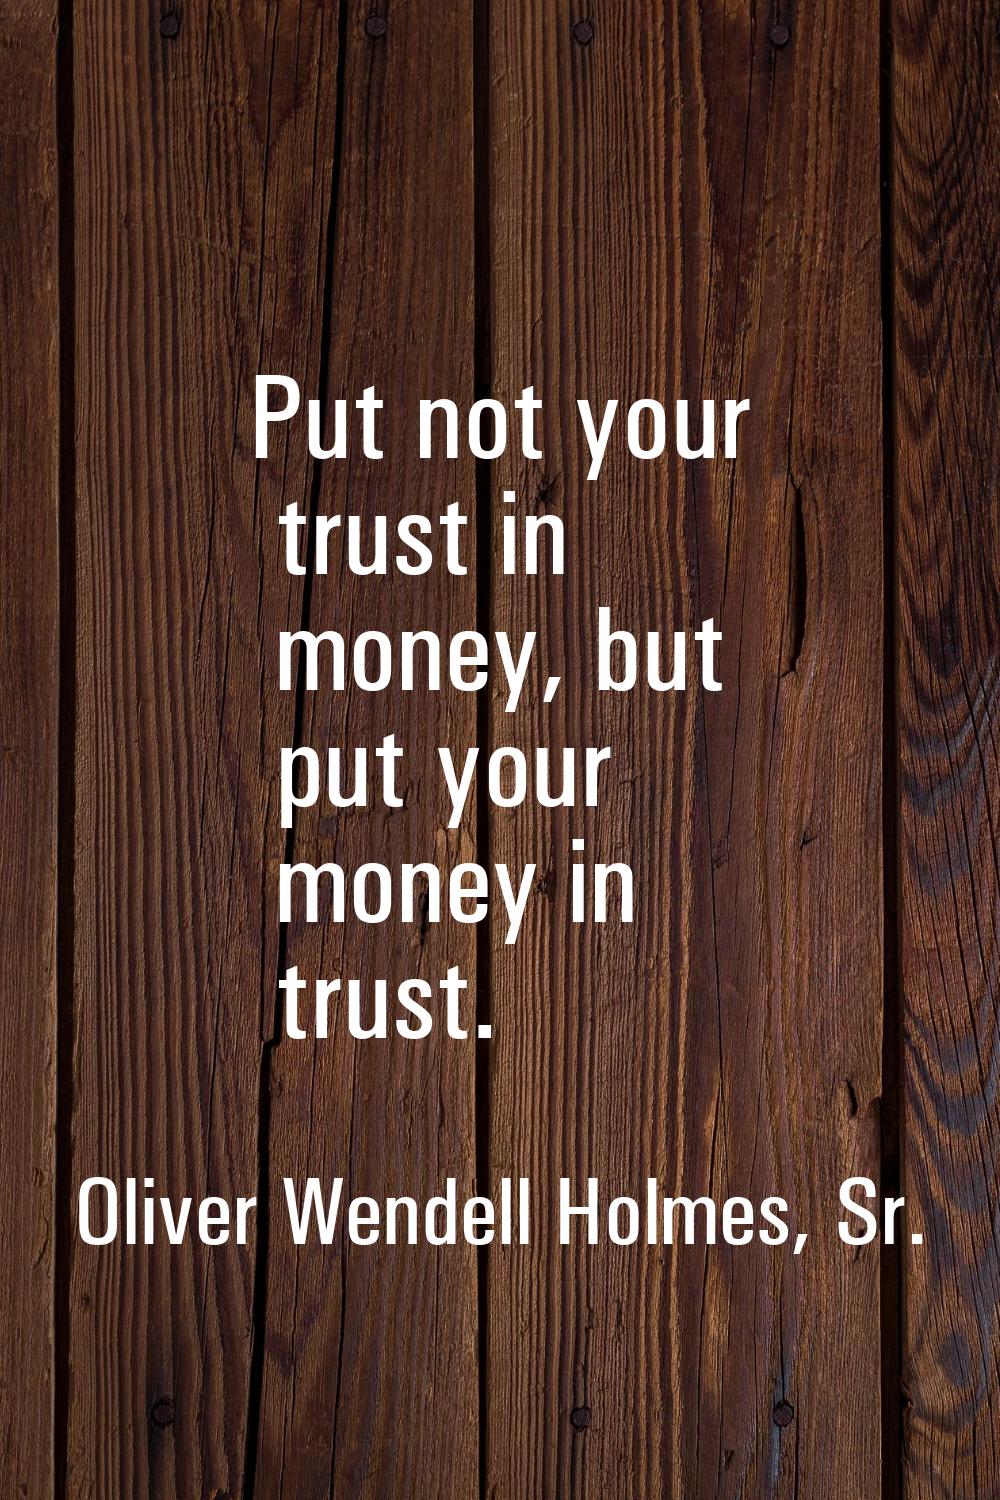 Put not your trust in money, but put your money in trust.